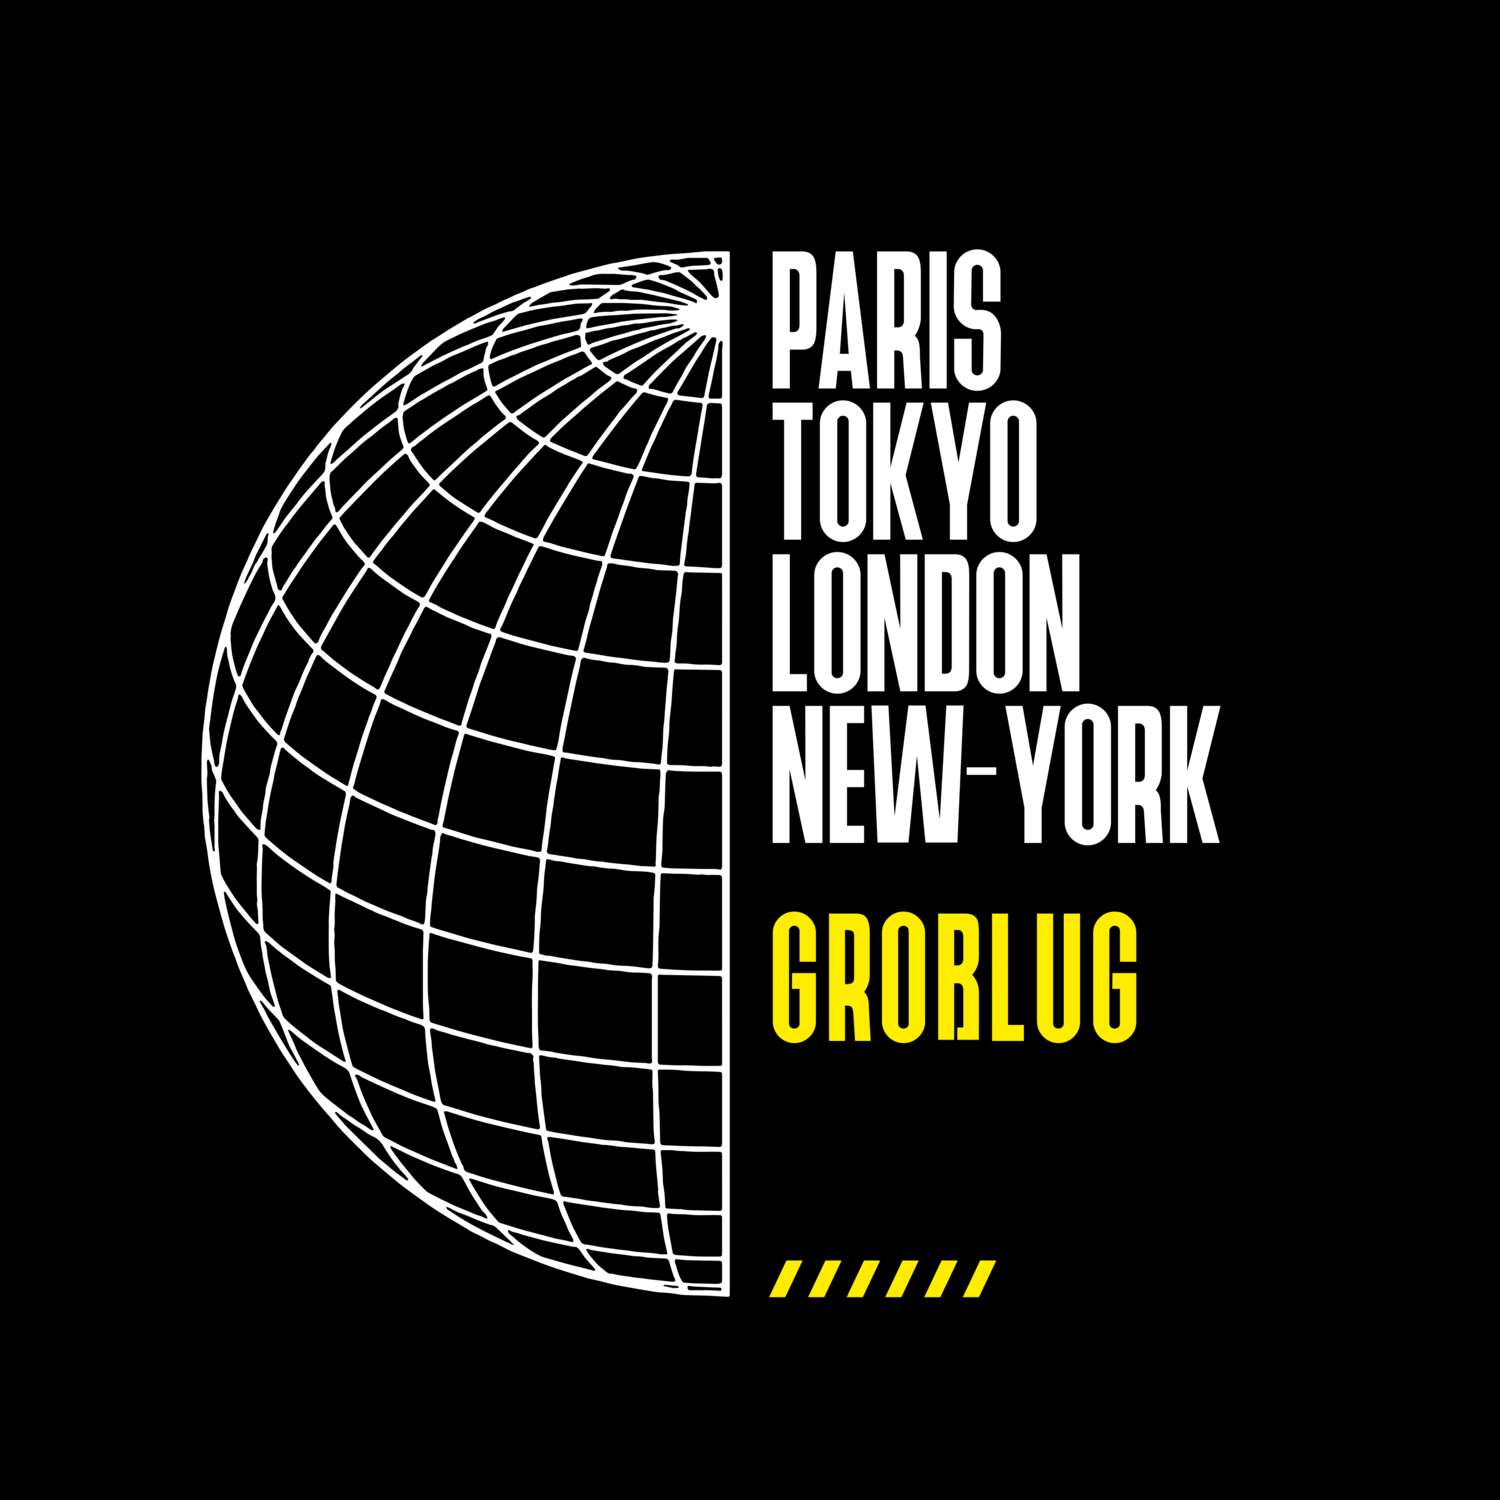 Großlug T-Shirt »Paris Tokyo London«